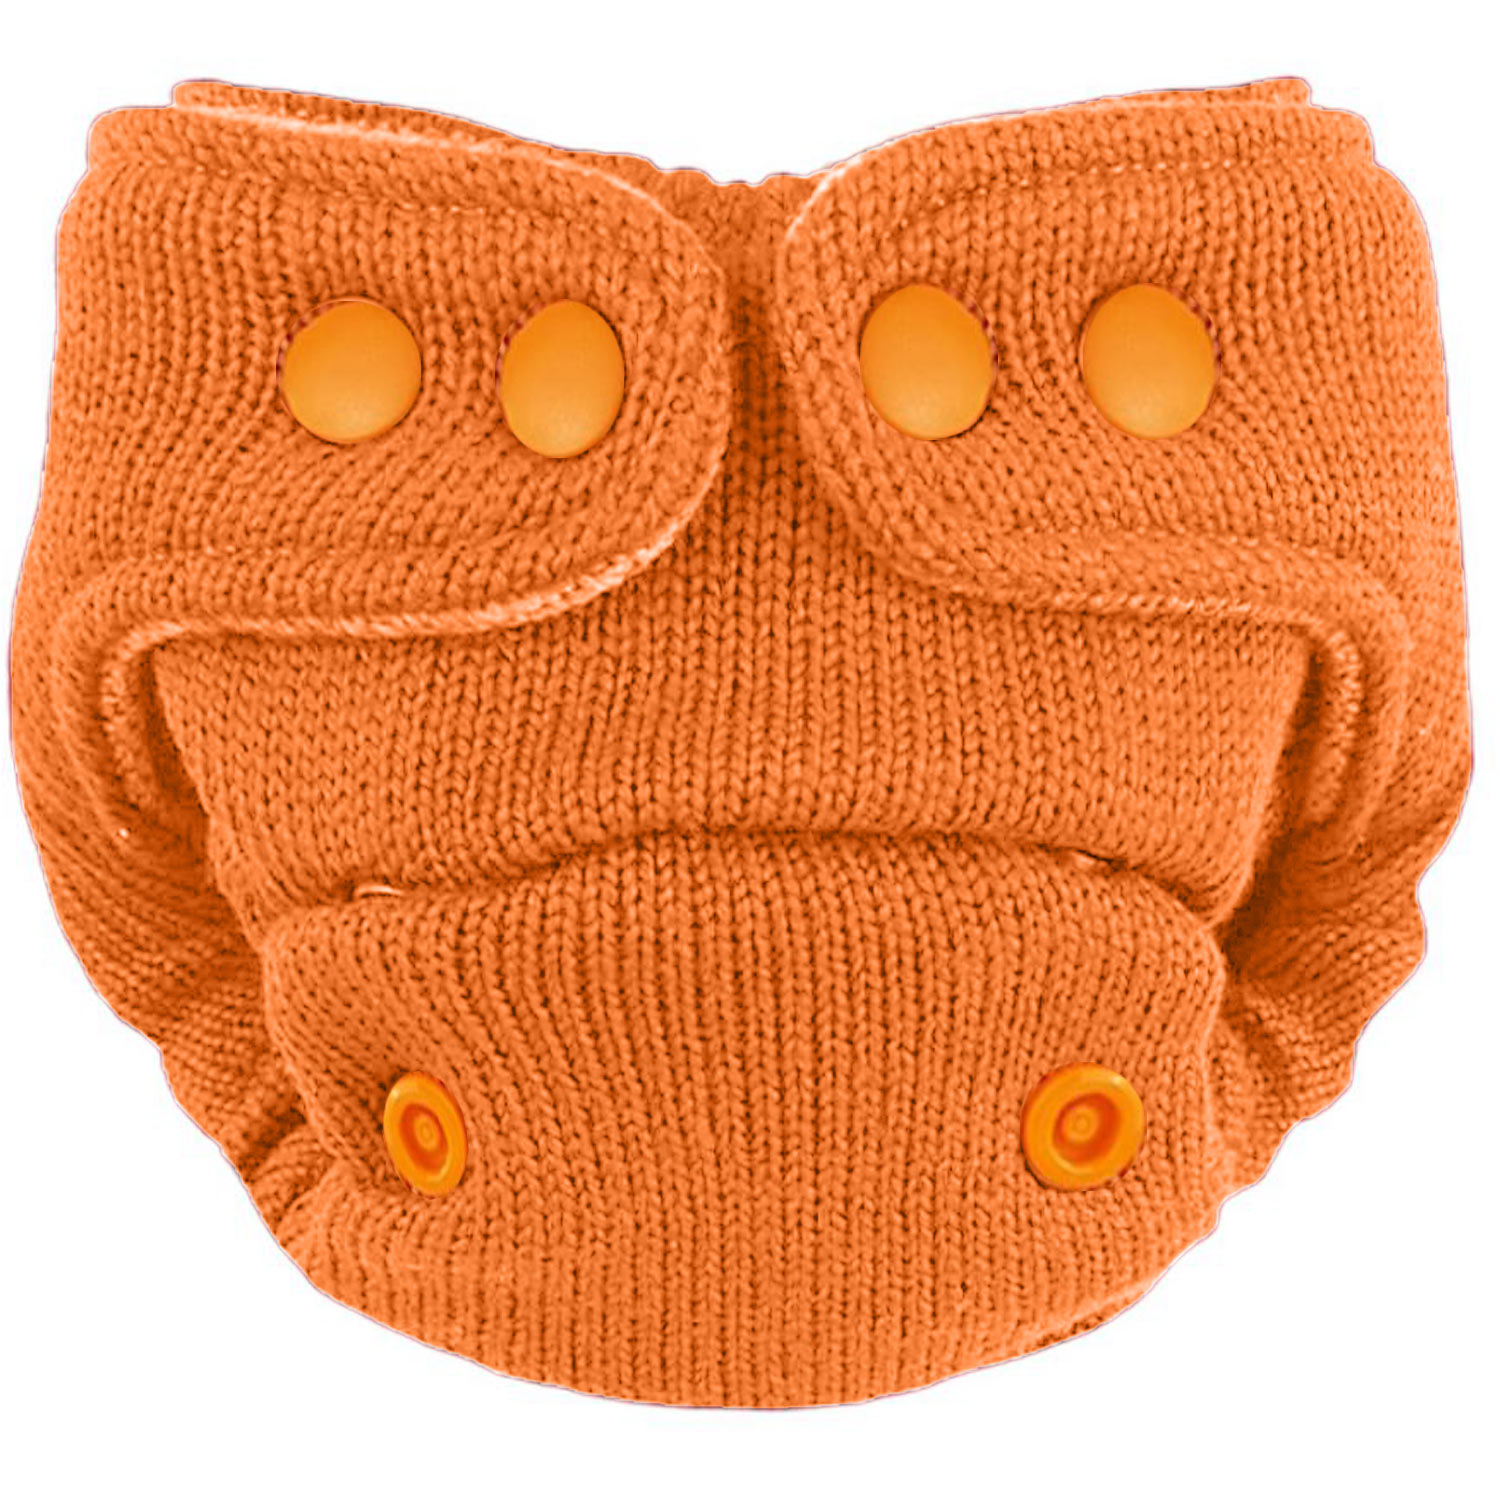 Magabi Knitted Newborn Wool Cover